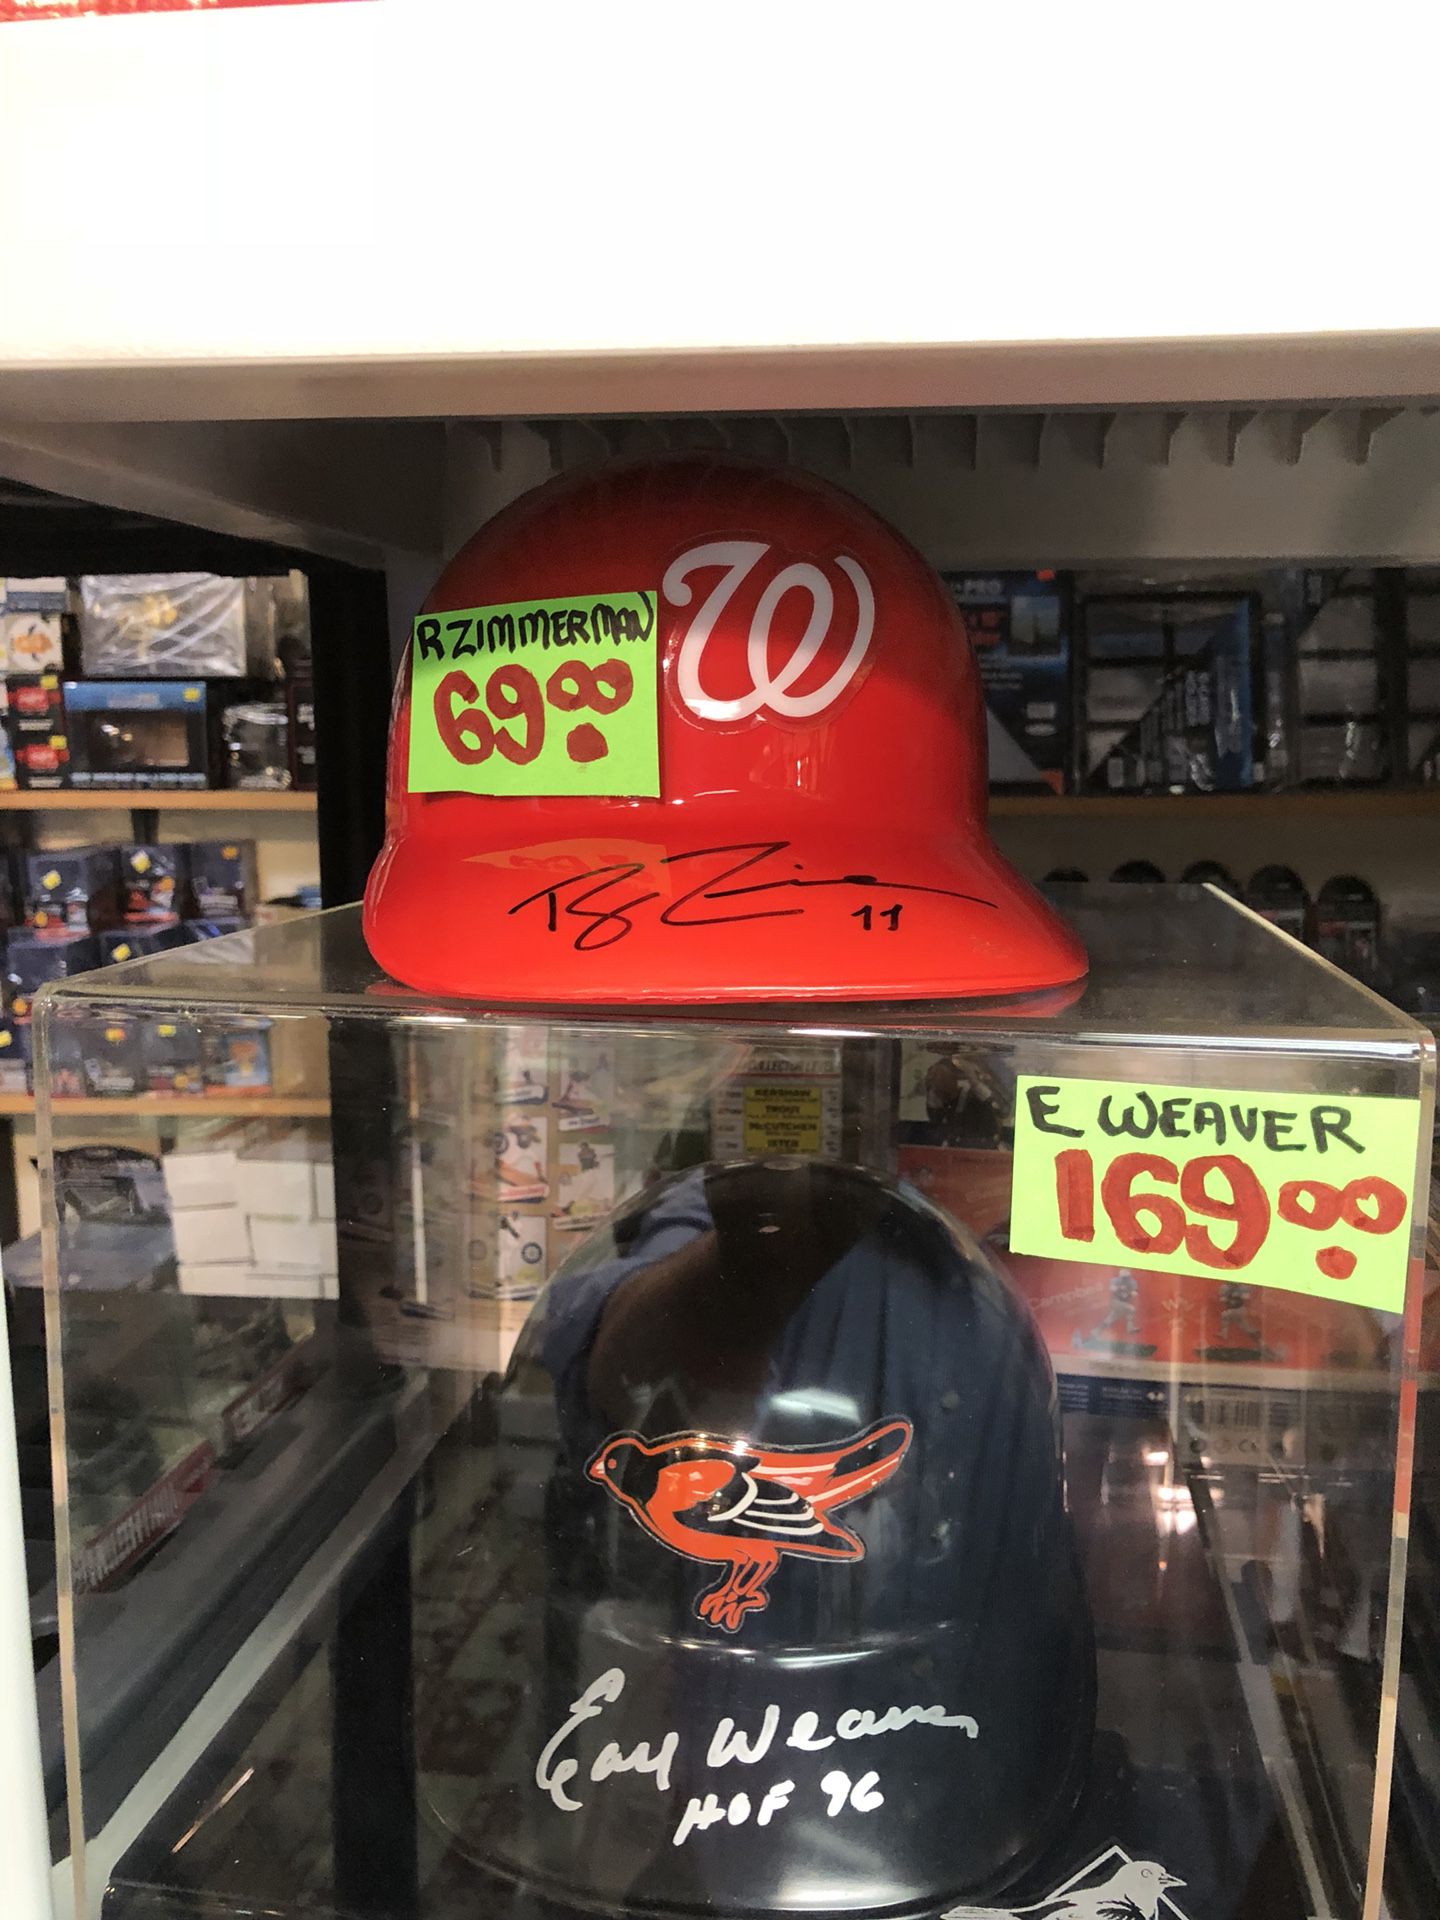 Ryan Zimmerman Autographed Washington Nats (Replica) Batting Helmet! A beautiful affordable piece